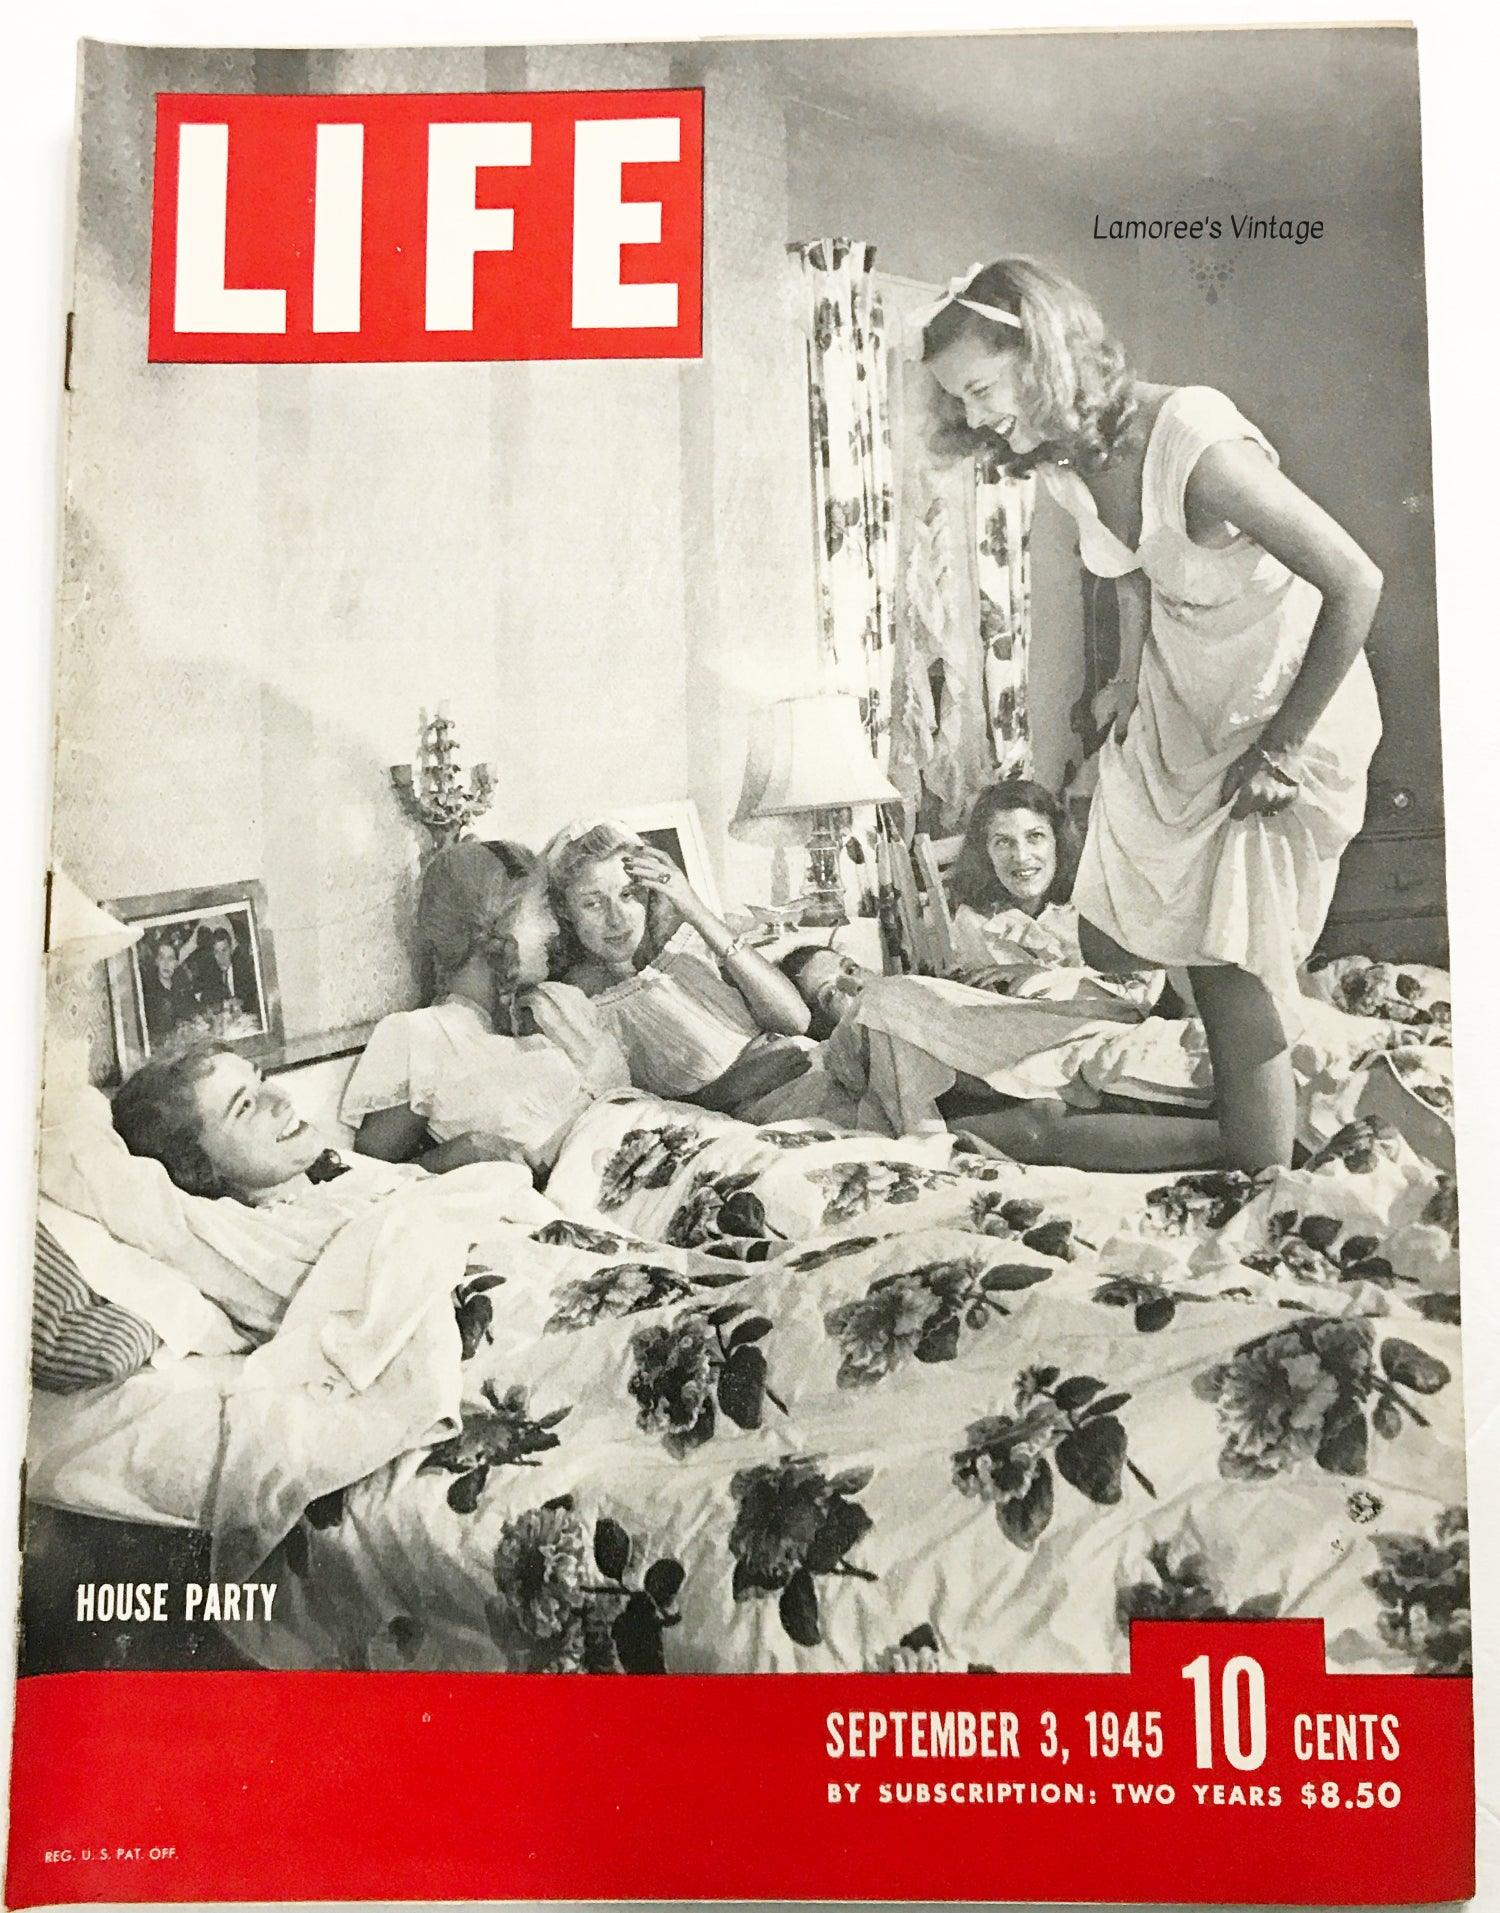 Life Magazine September 3, 1945 - Lamoree’s Vintage